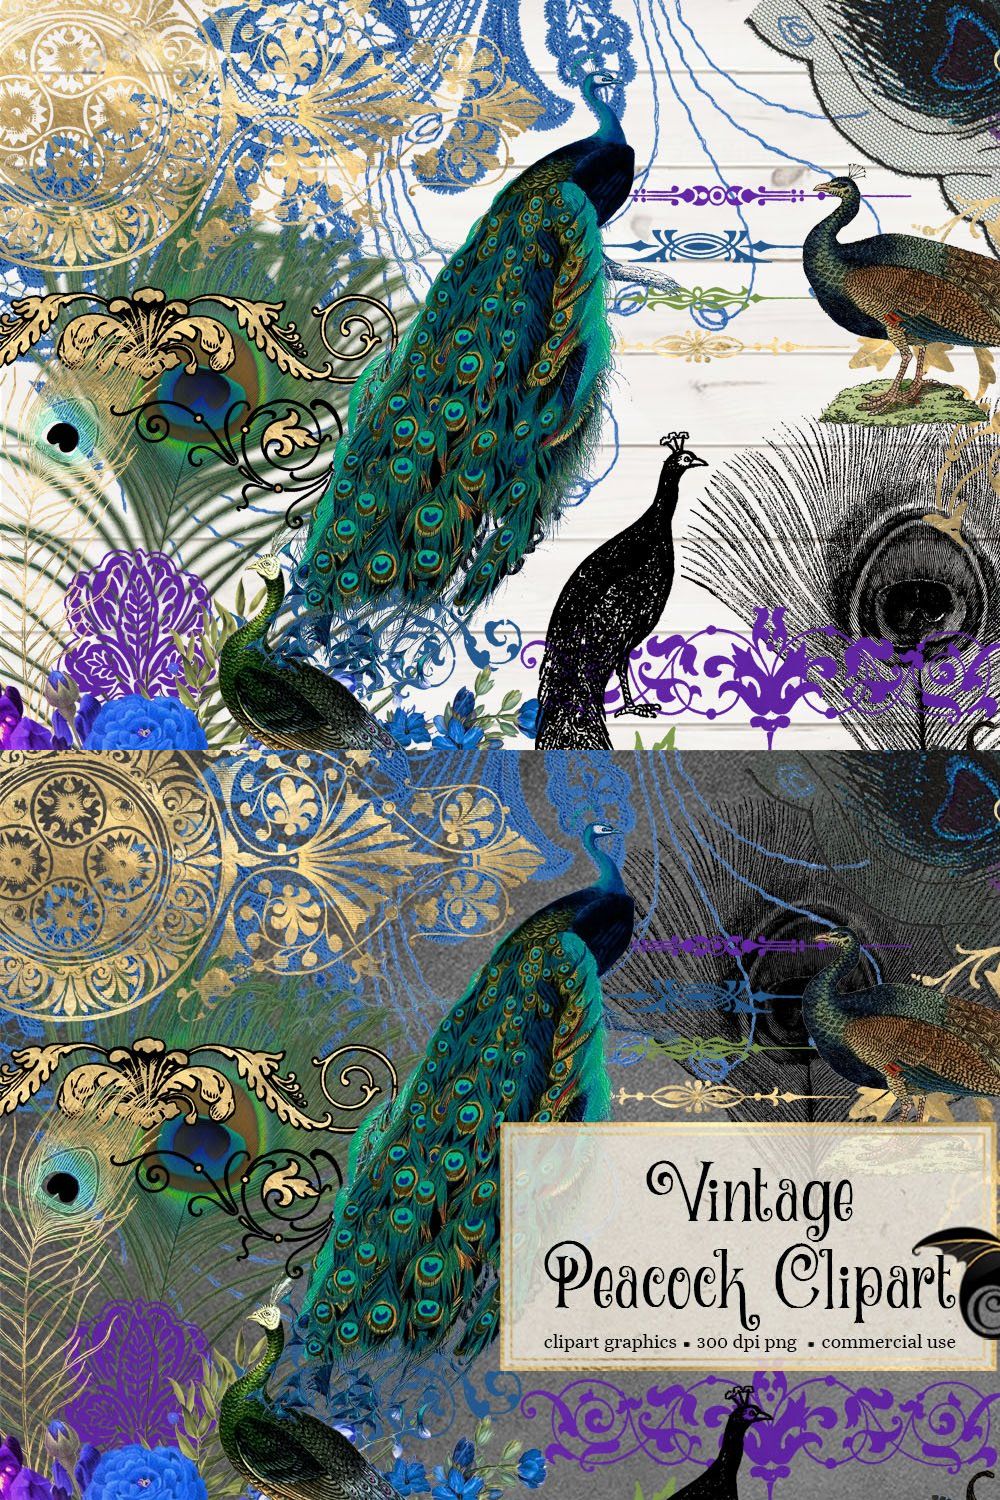 Vintage Peacock Clipart pinterest preview image.